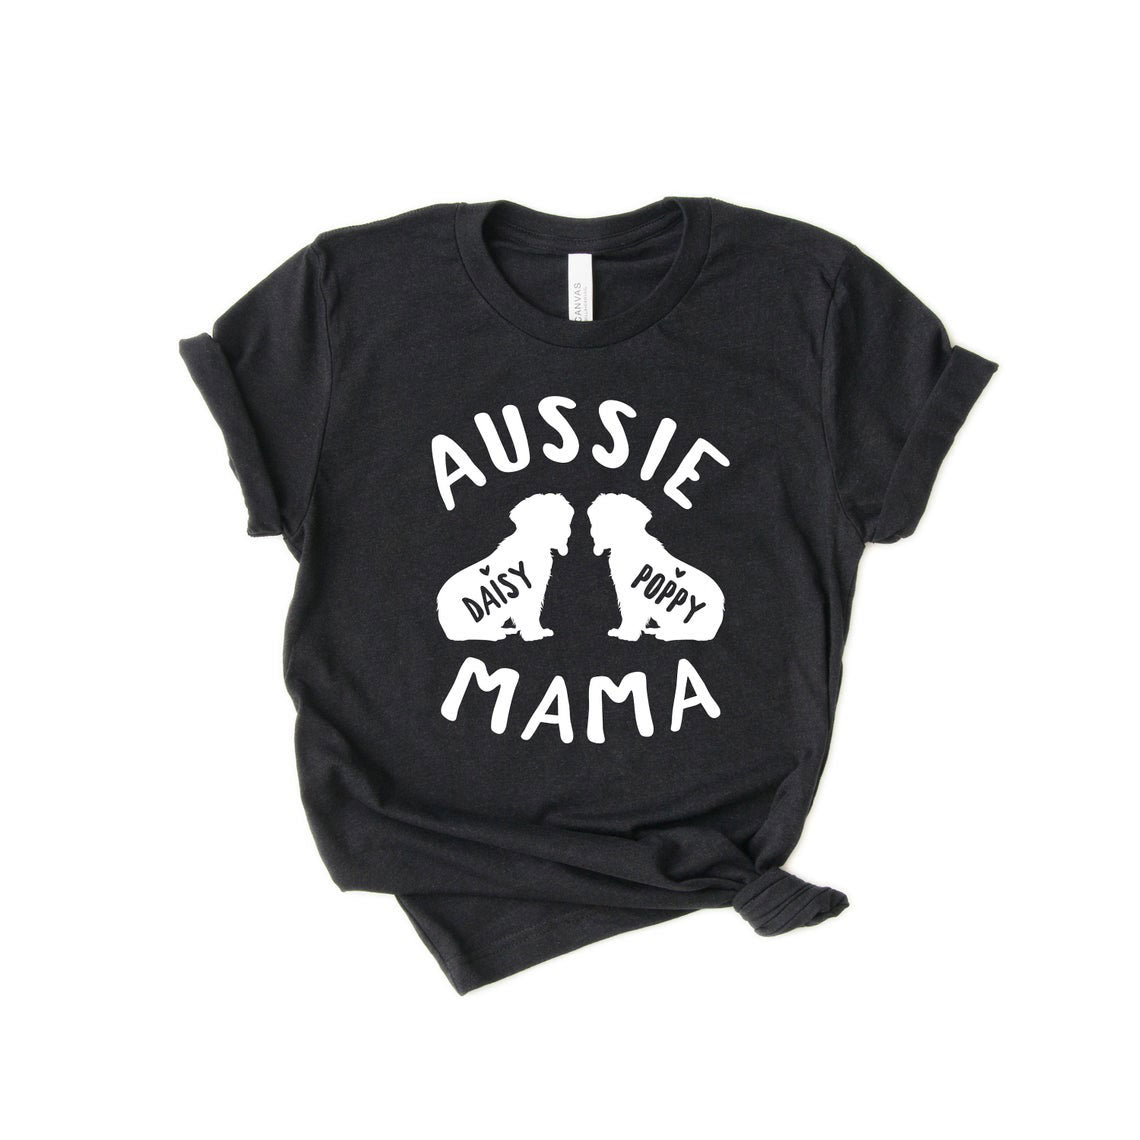 Personalized Aussie Mama Shirt - Unisex Premium T-Shirt  Bella + Canvas 3001